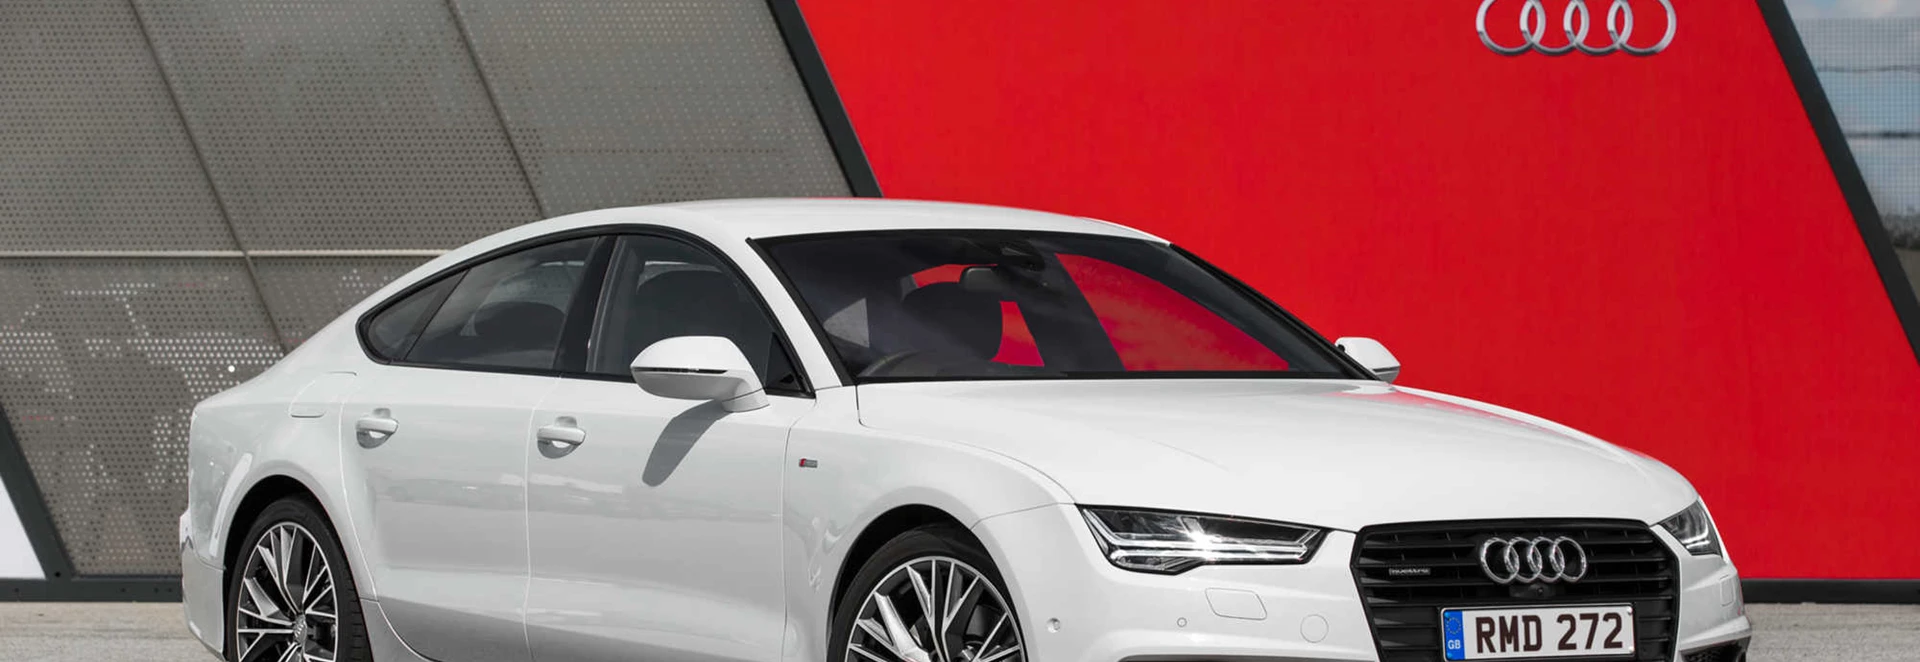 Audi A7 Sportback hatchback review 